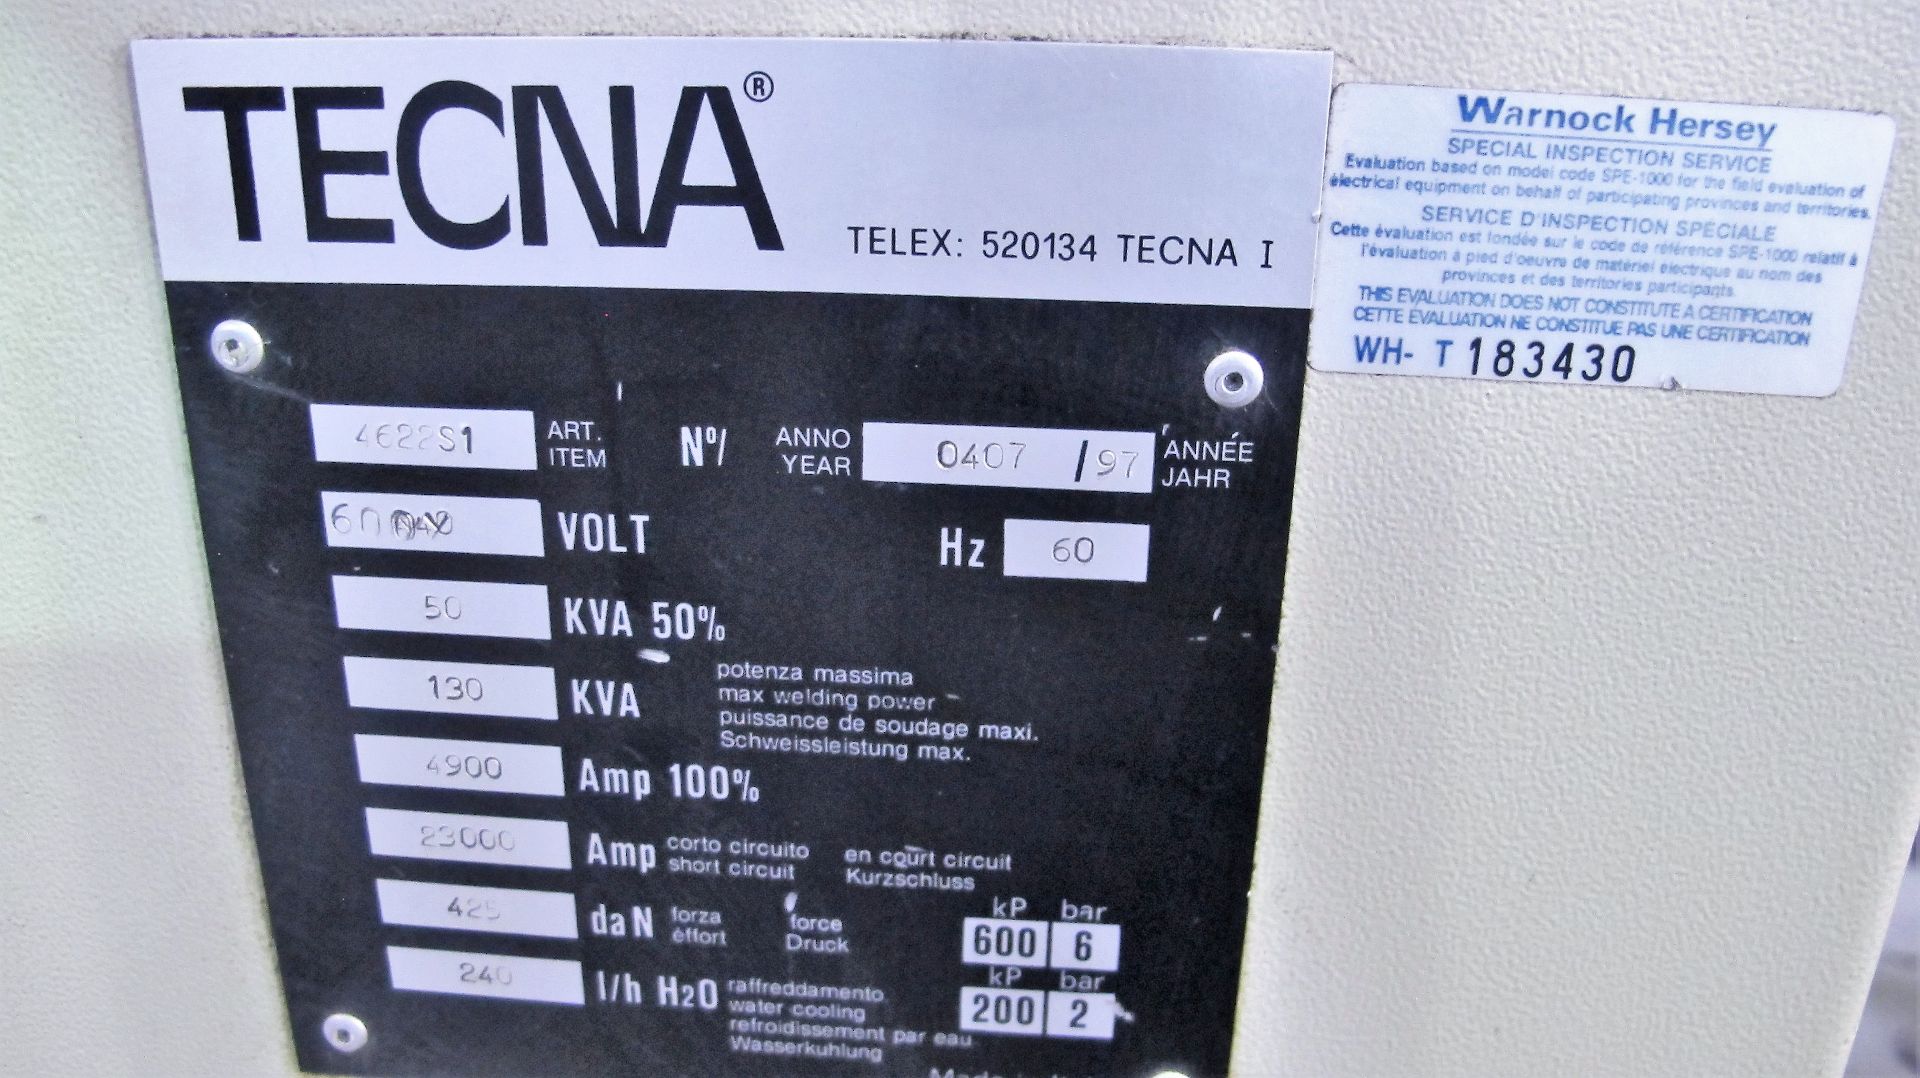 TECNA 4622S1 SPOT WELDER, 130KVA, TE90 MARK II CONTROL, 24" THROAT (NO TANKS) - Image 4 of 4